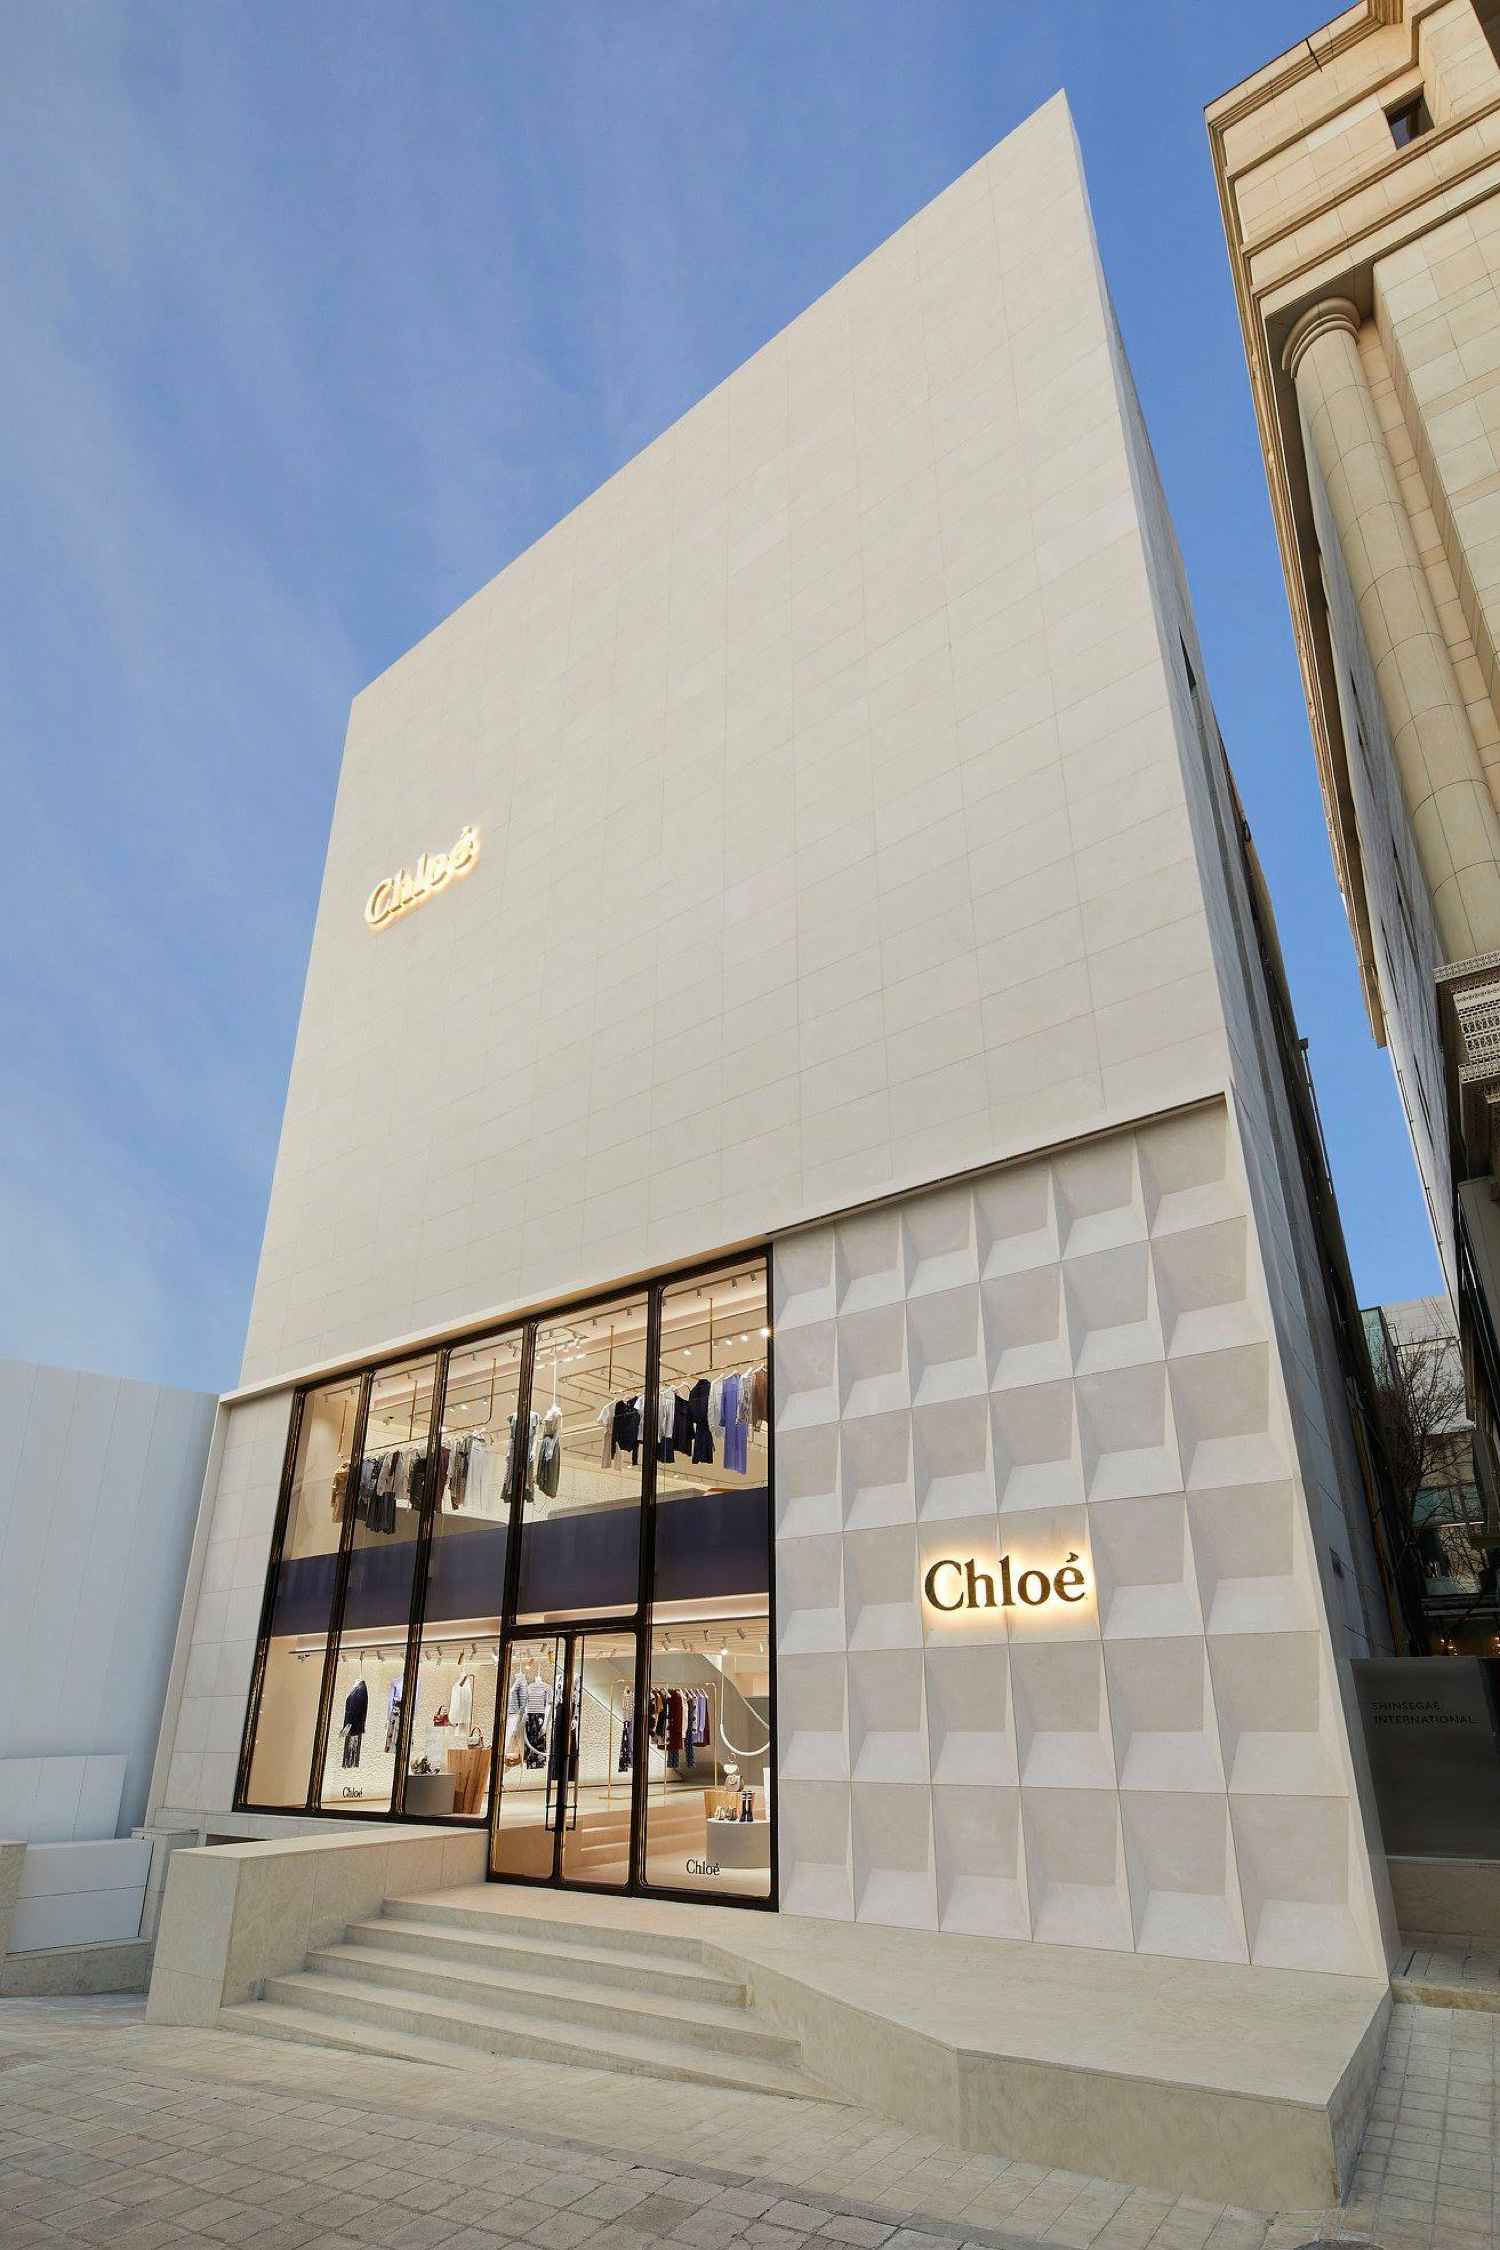 Louis Vuitton Seoul flagship opens - Inside Retail Asia